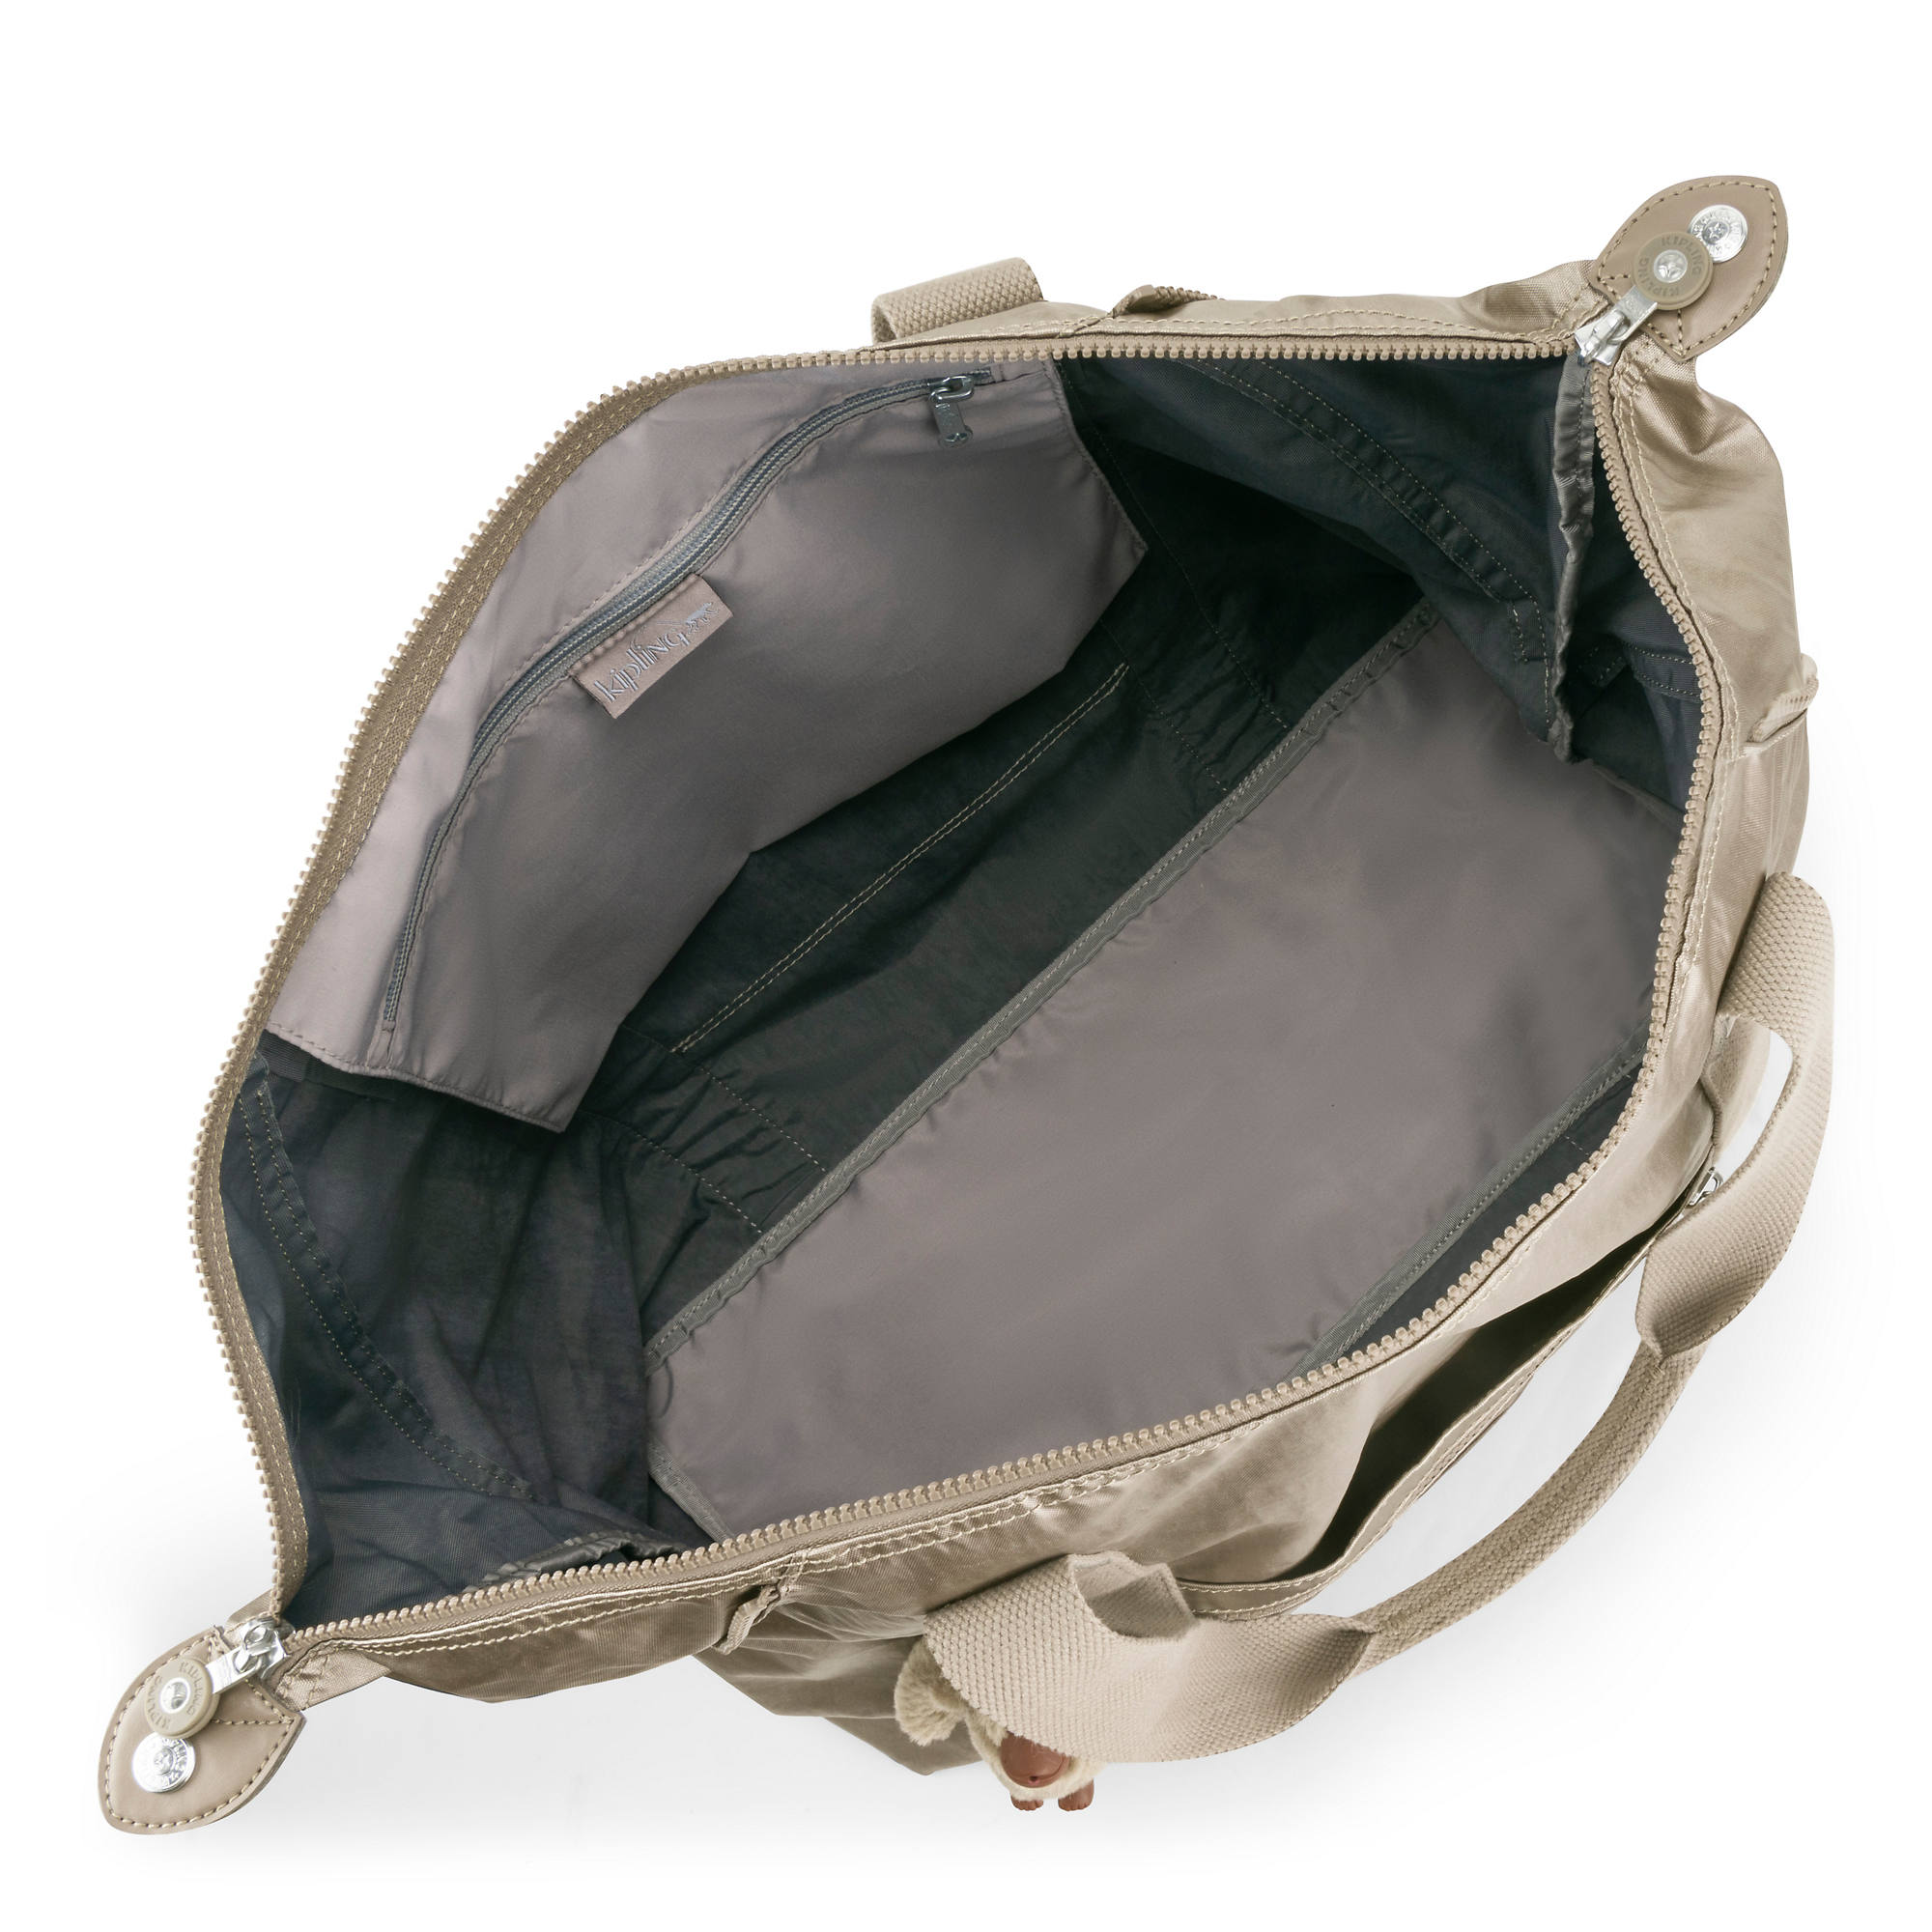 Kipling Art Medium Metallic Tote Bag | eBay